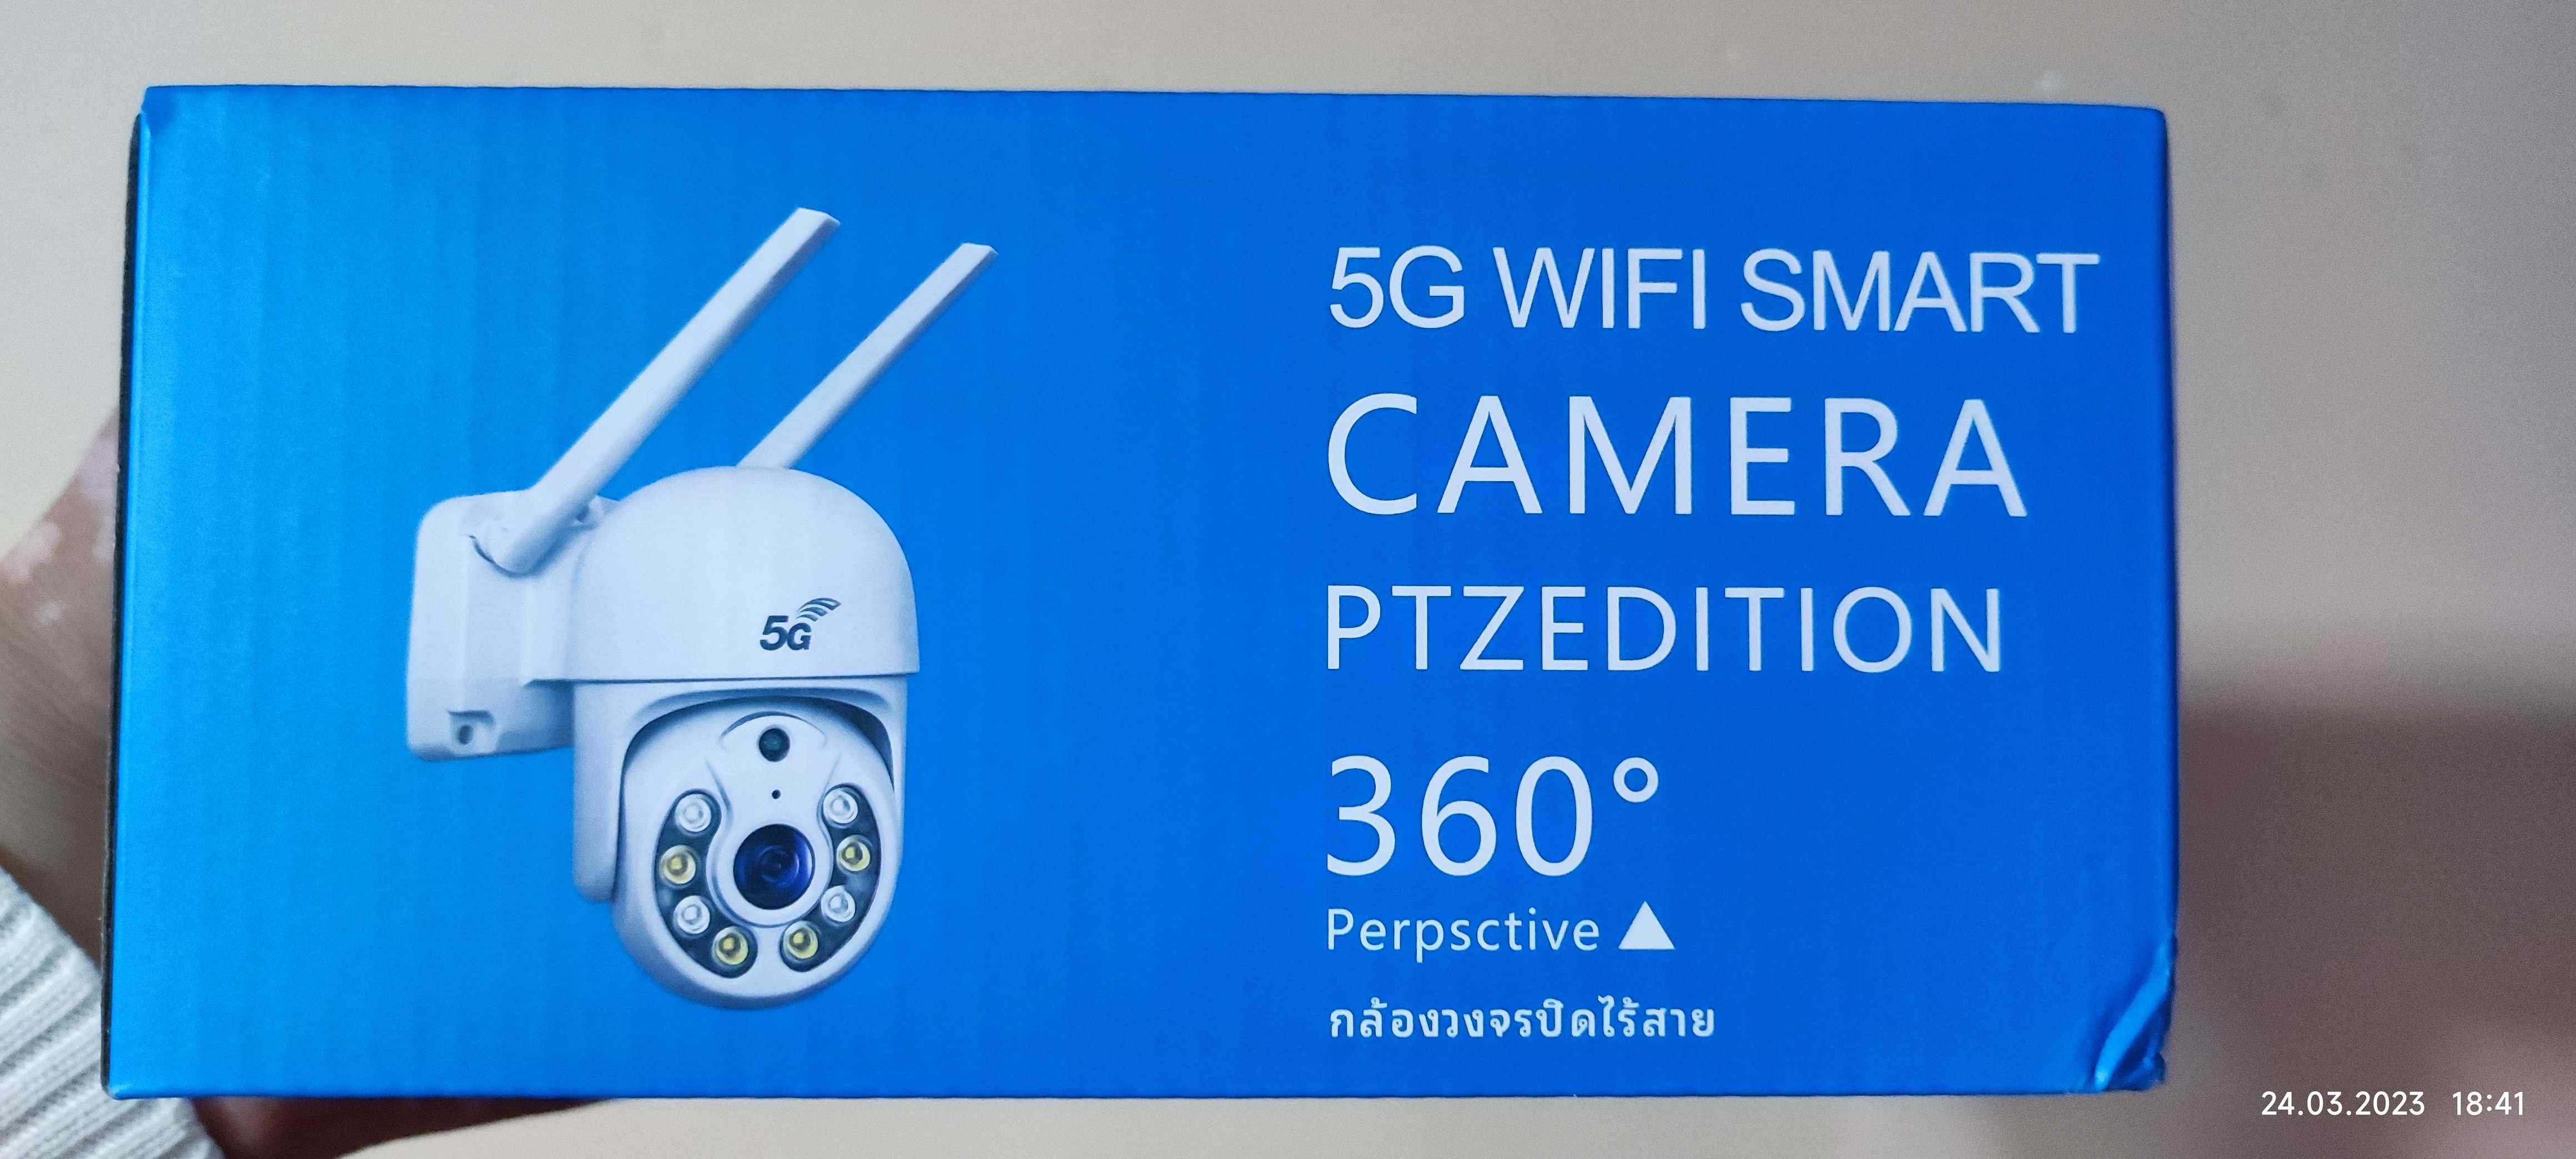 Smart WiFi 5G camera